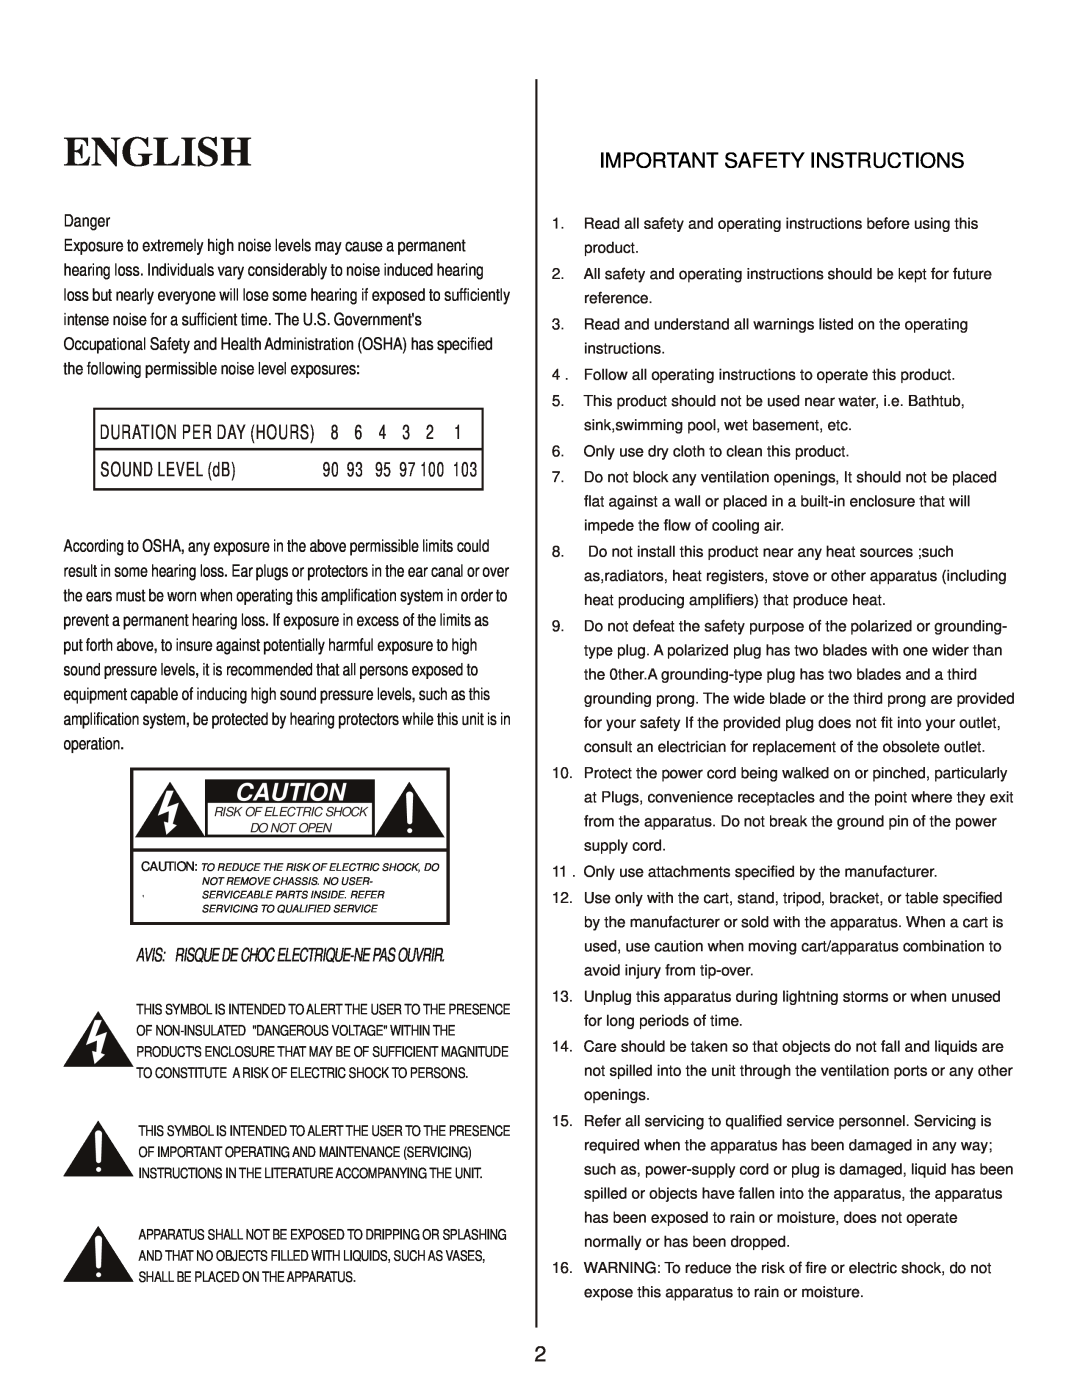 Kustom Dart 10FX owner manual English, SOUND LEVEL dB, Danger, Important Safety Instructions 